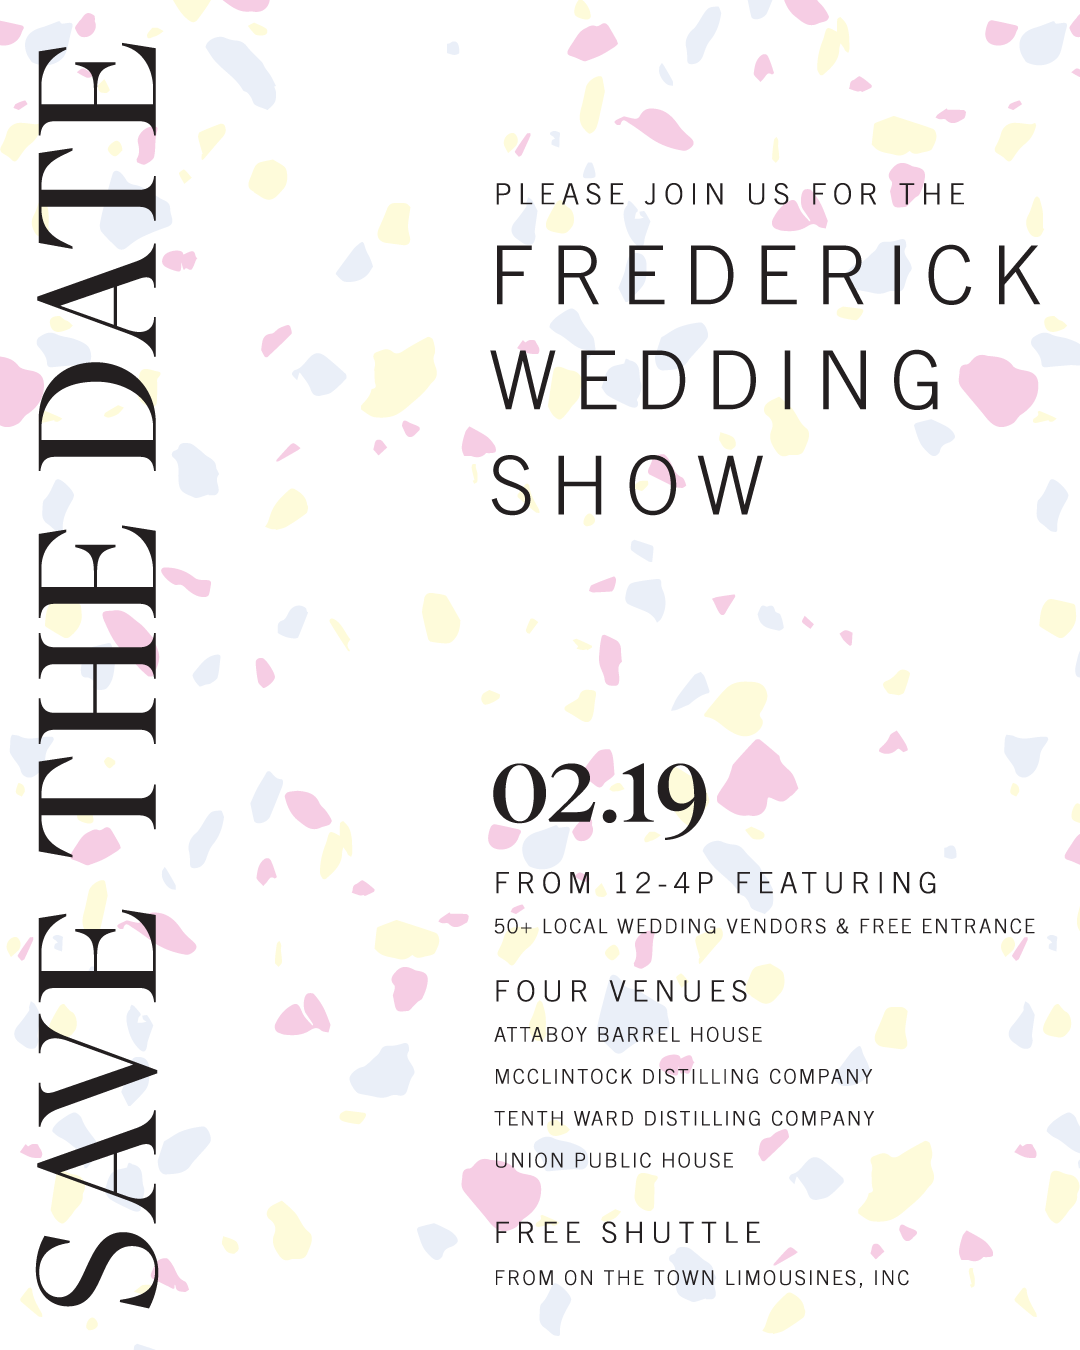 The Frederick Wedding Show